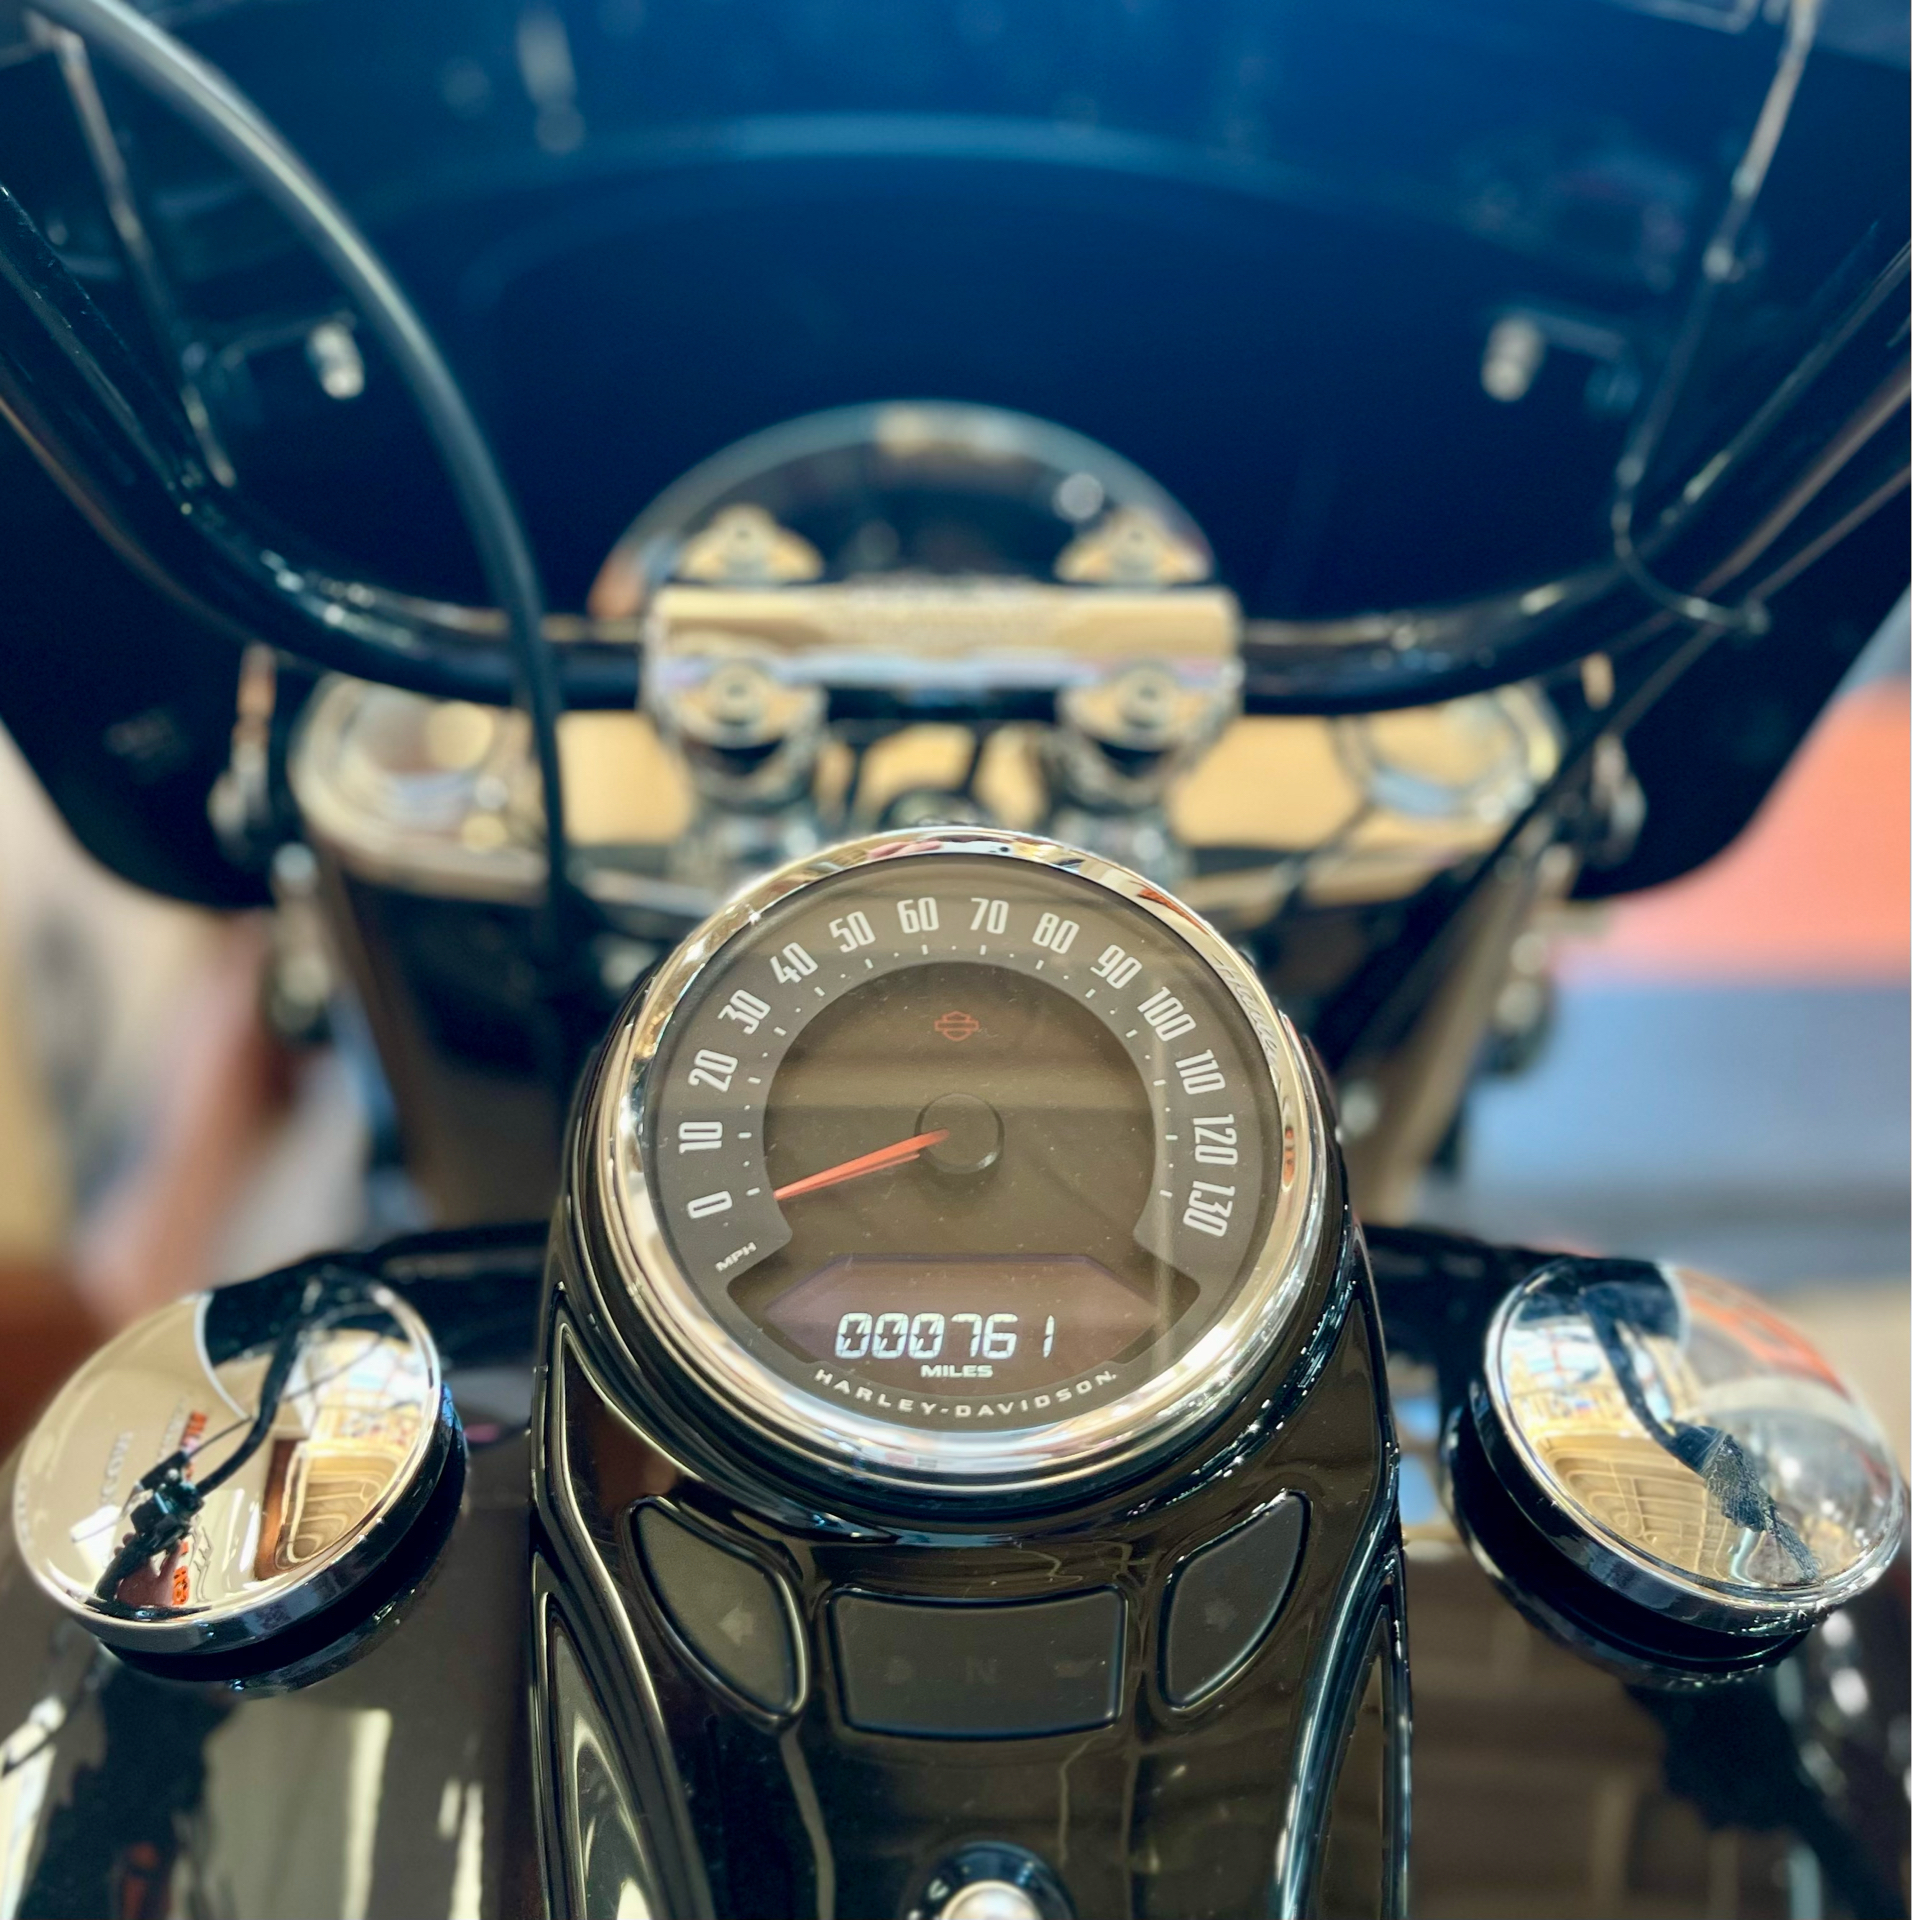 2021 Harley-Davidson Heritage Classic 114 in Loveland, Colorado - Photo 6